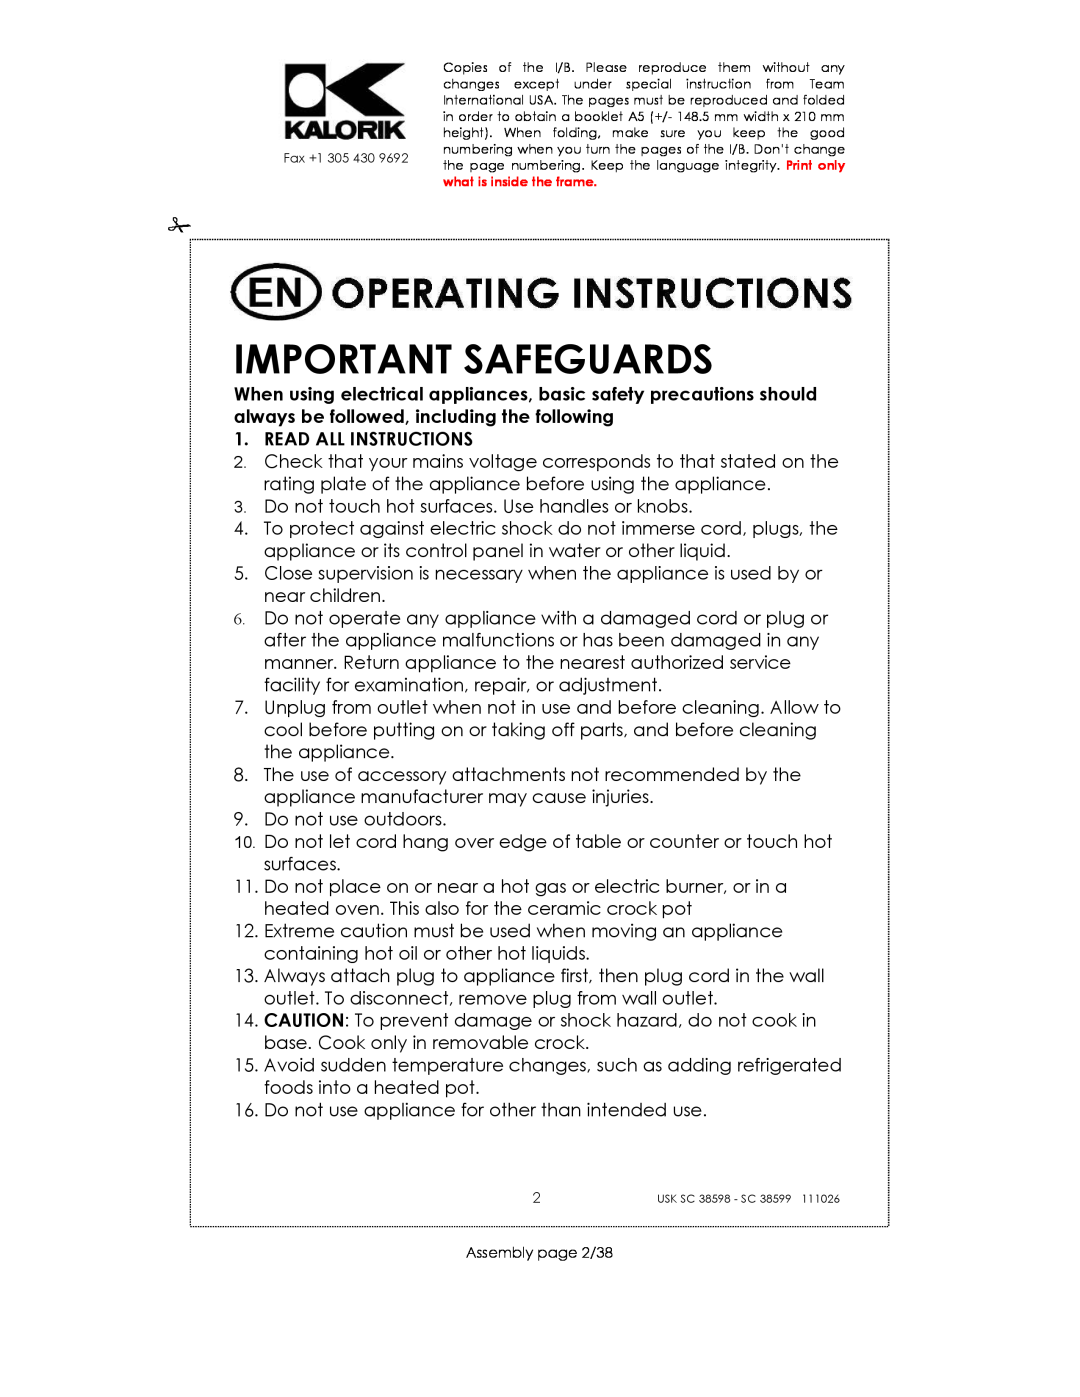 Kalorik usk sc 38598, 38599 manual Important Safeguards, Read All Instructions 